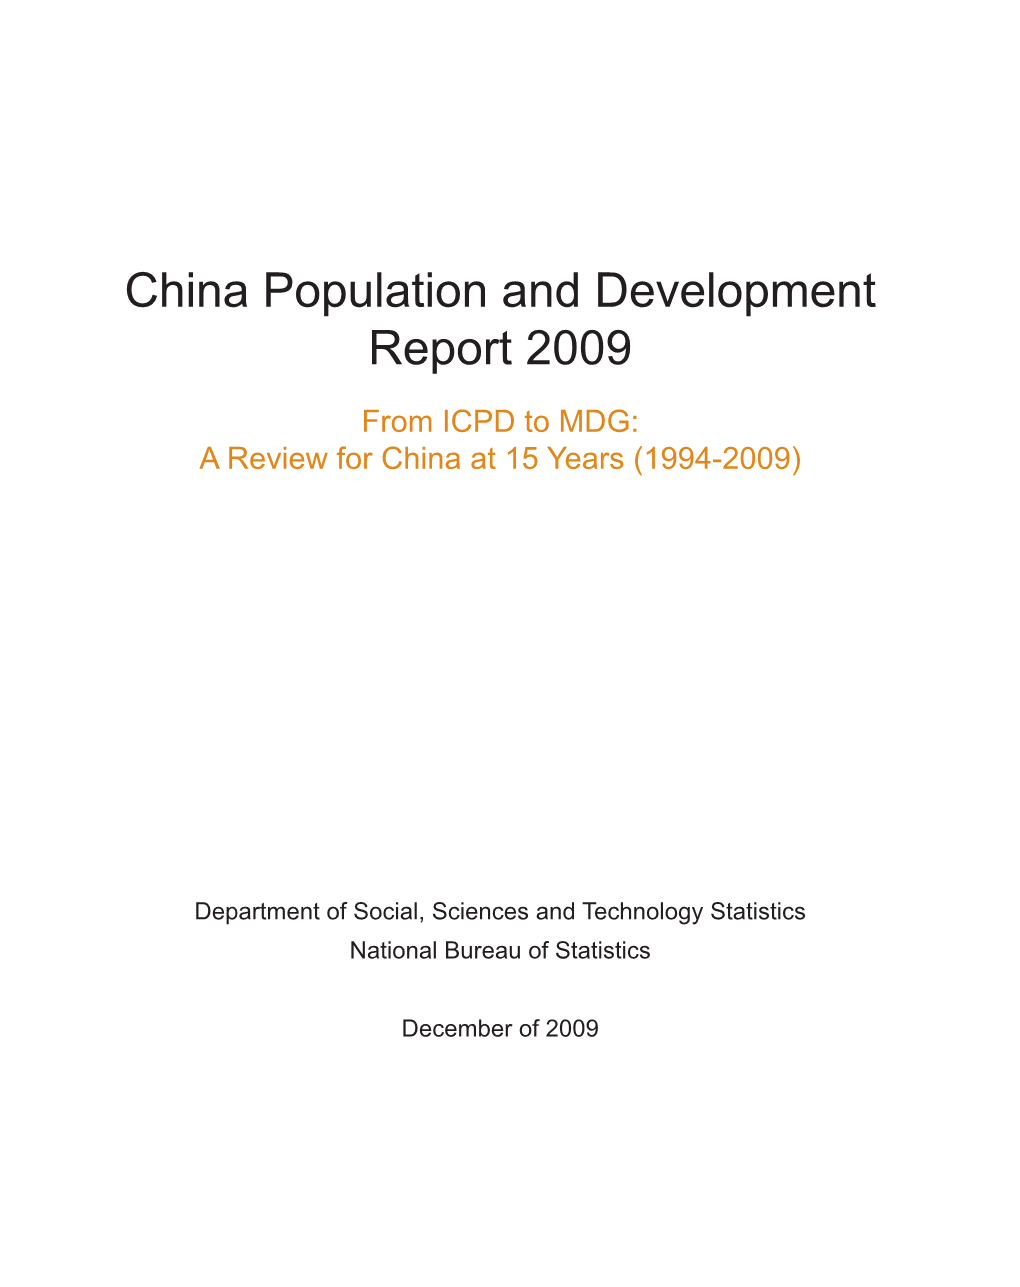 China Population and Development Report 2009